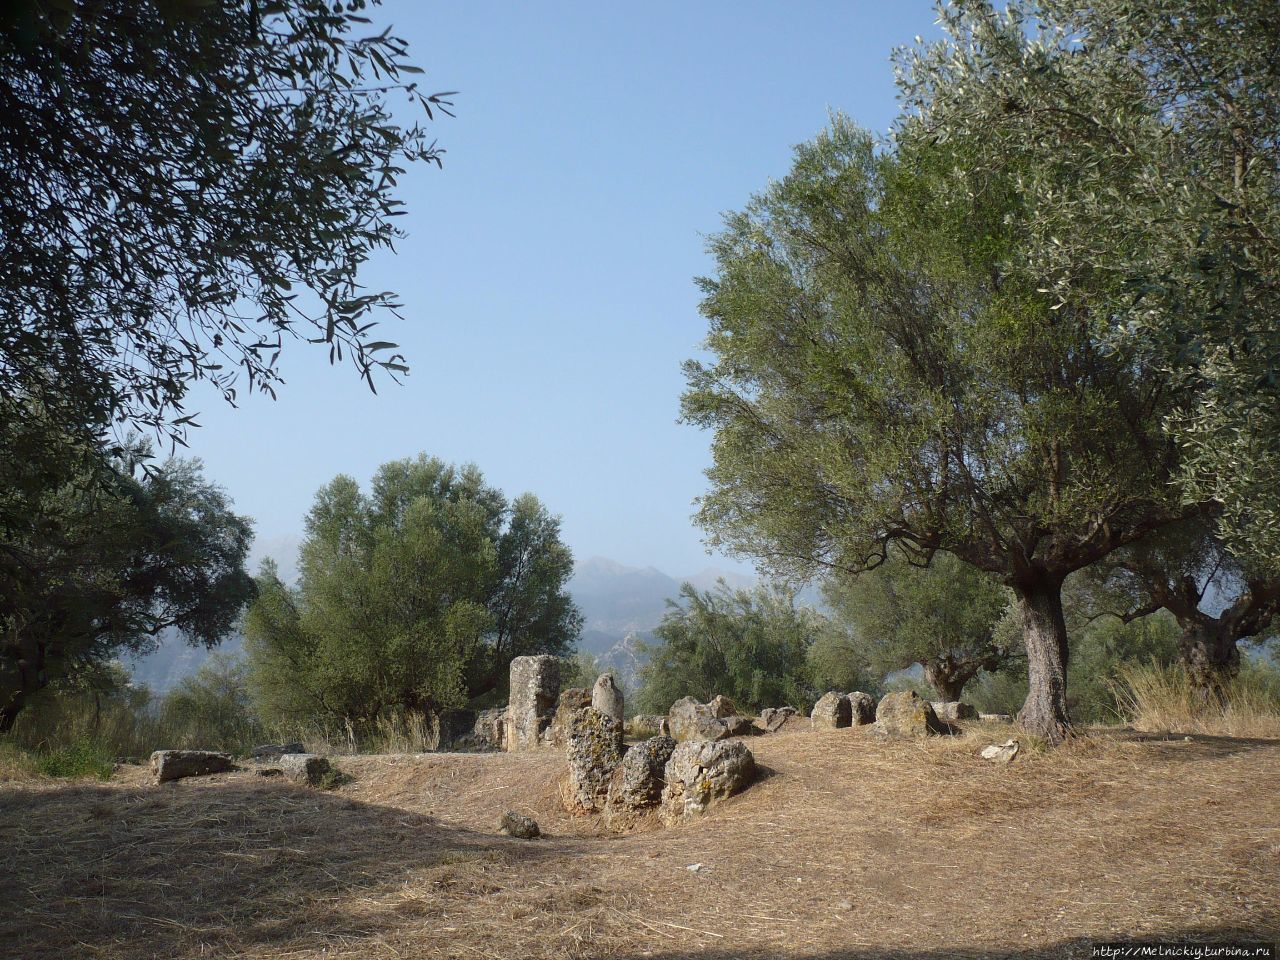 На руинах Древней Спарты Спарта, Греция